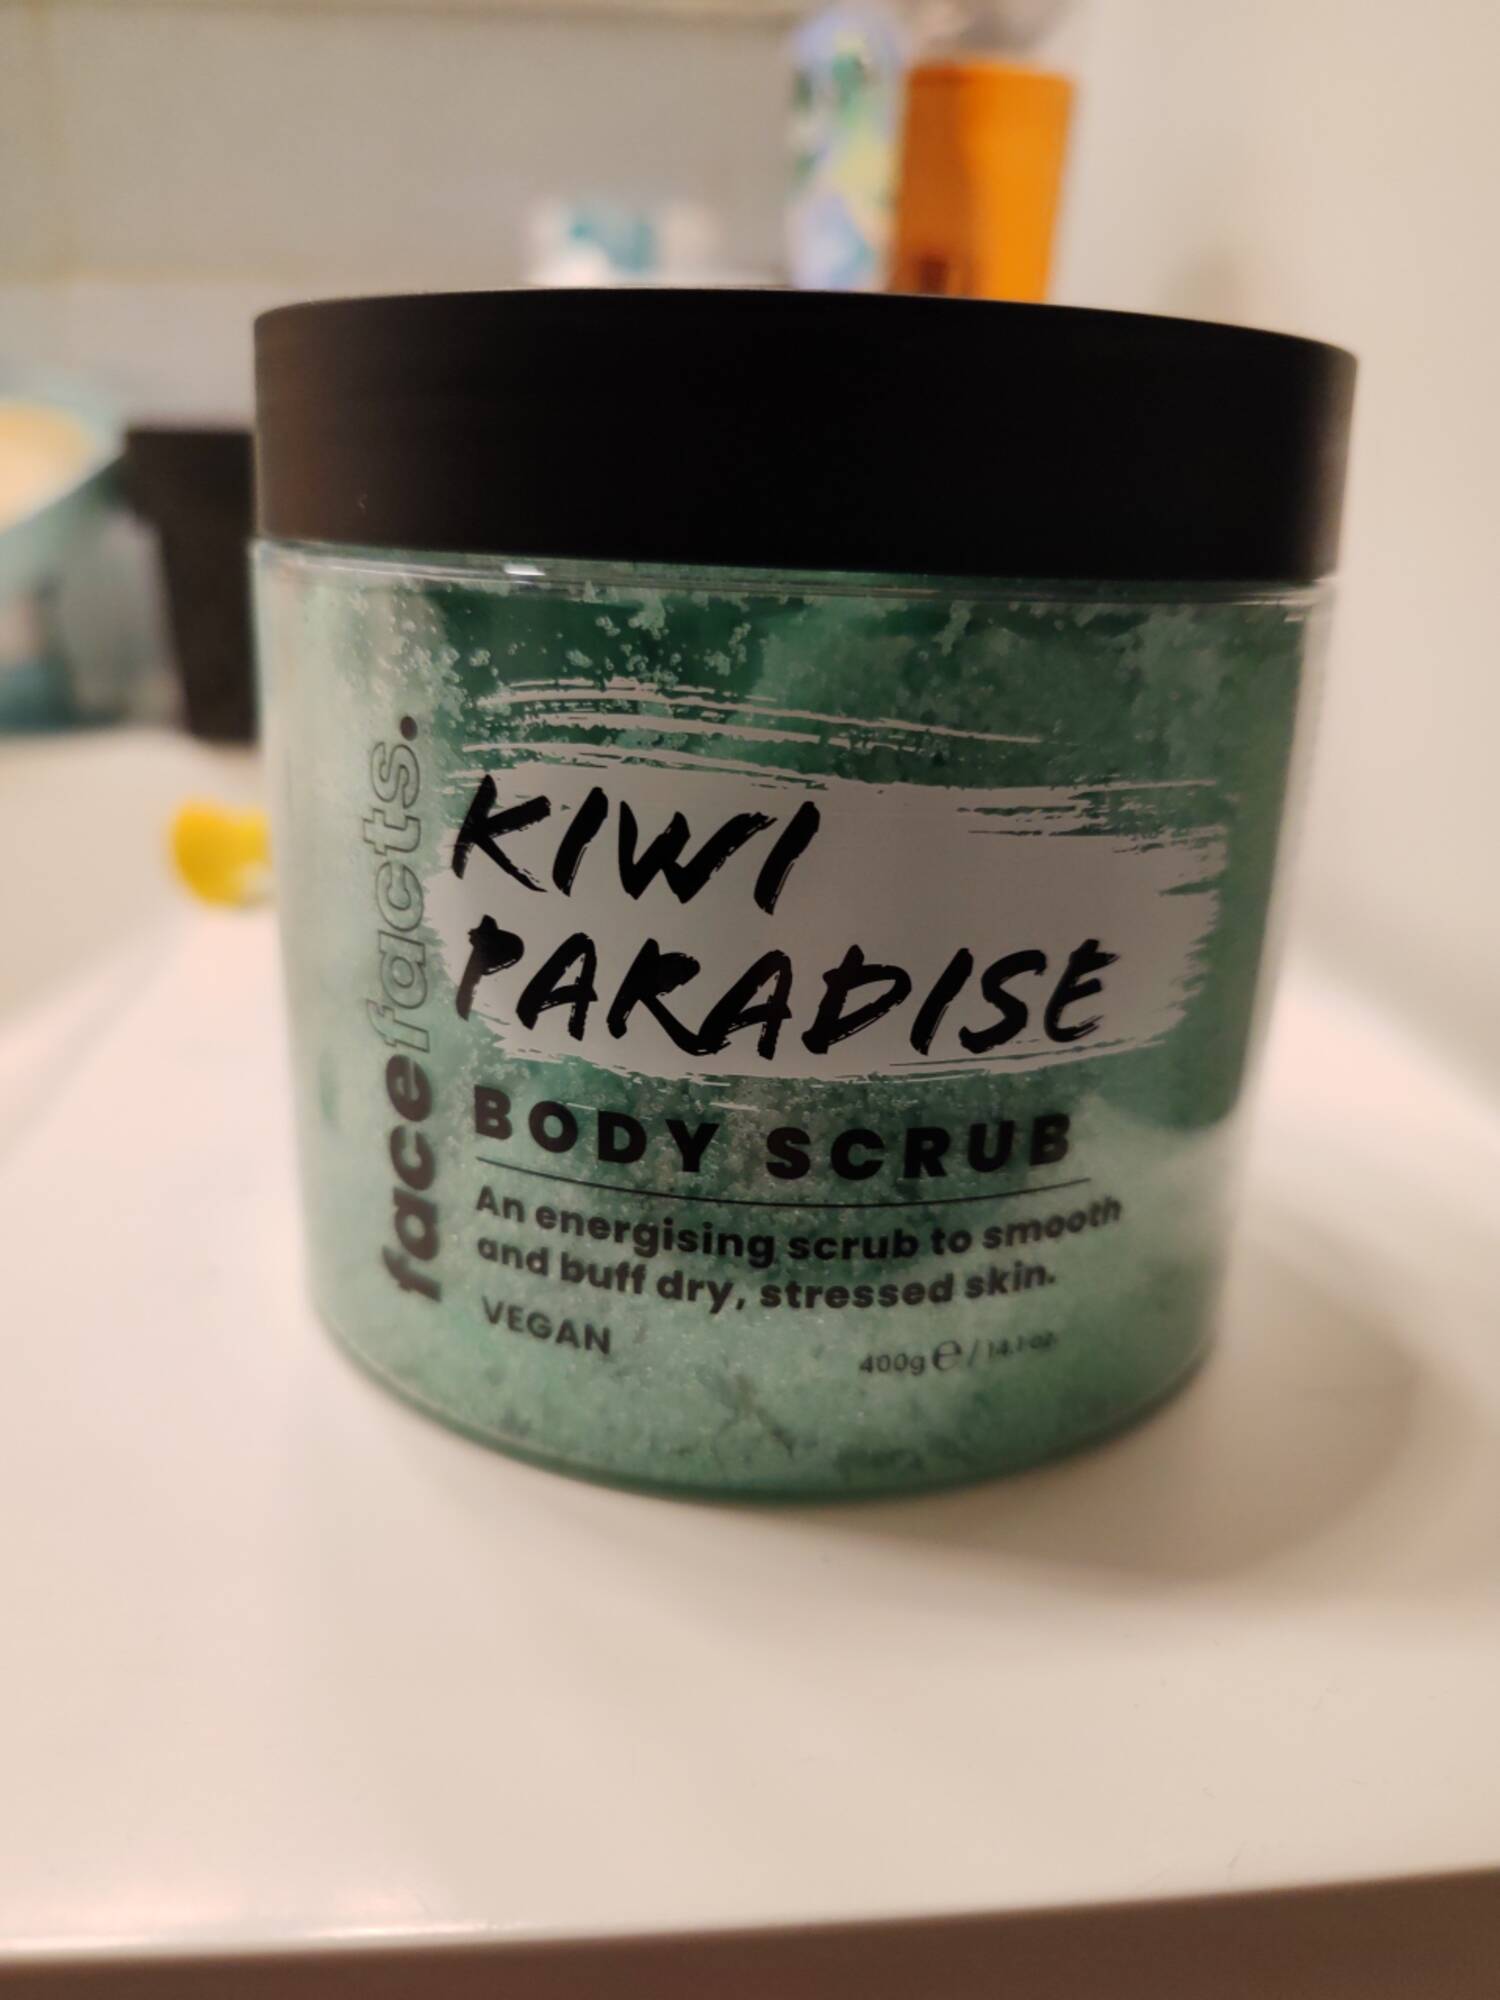 FACE FACTS - Kiwi paradise - Body scrub